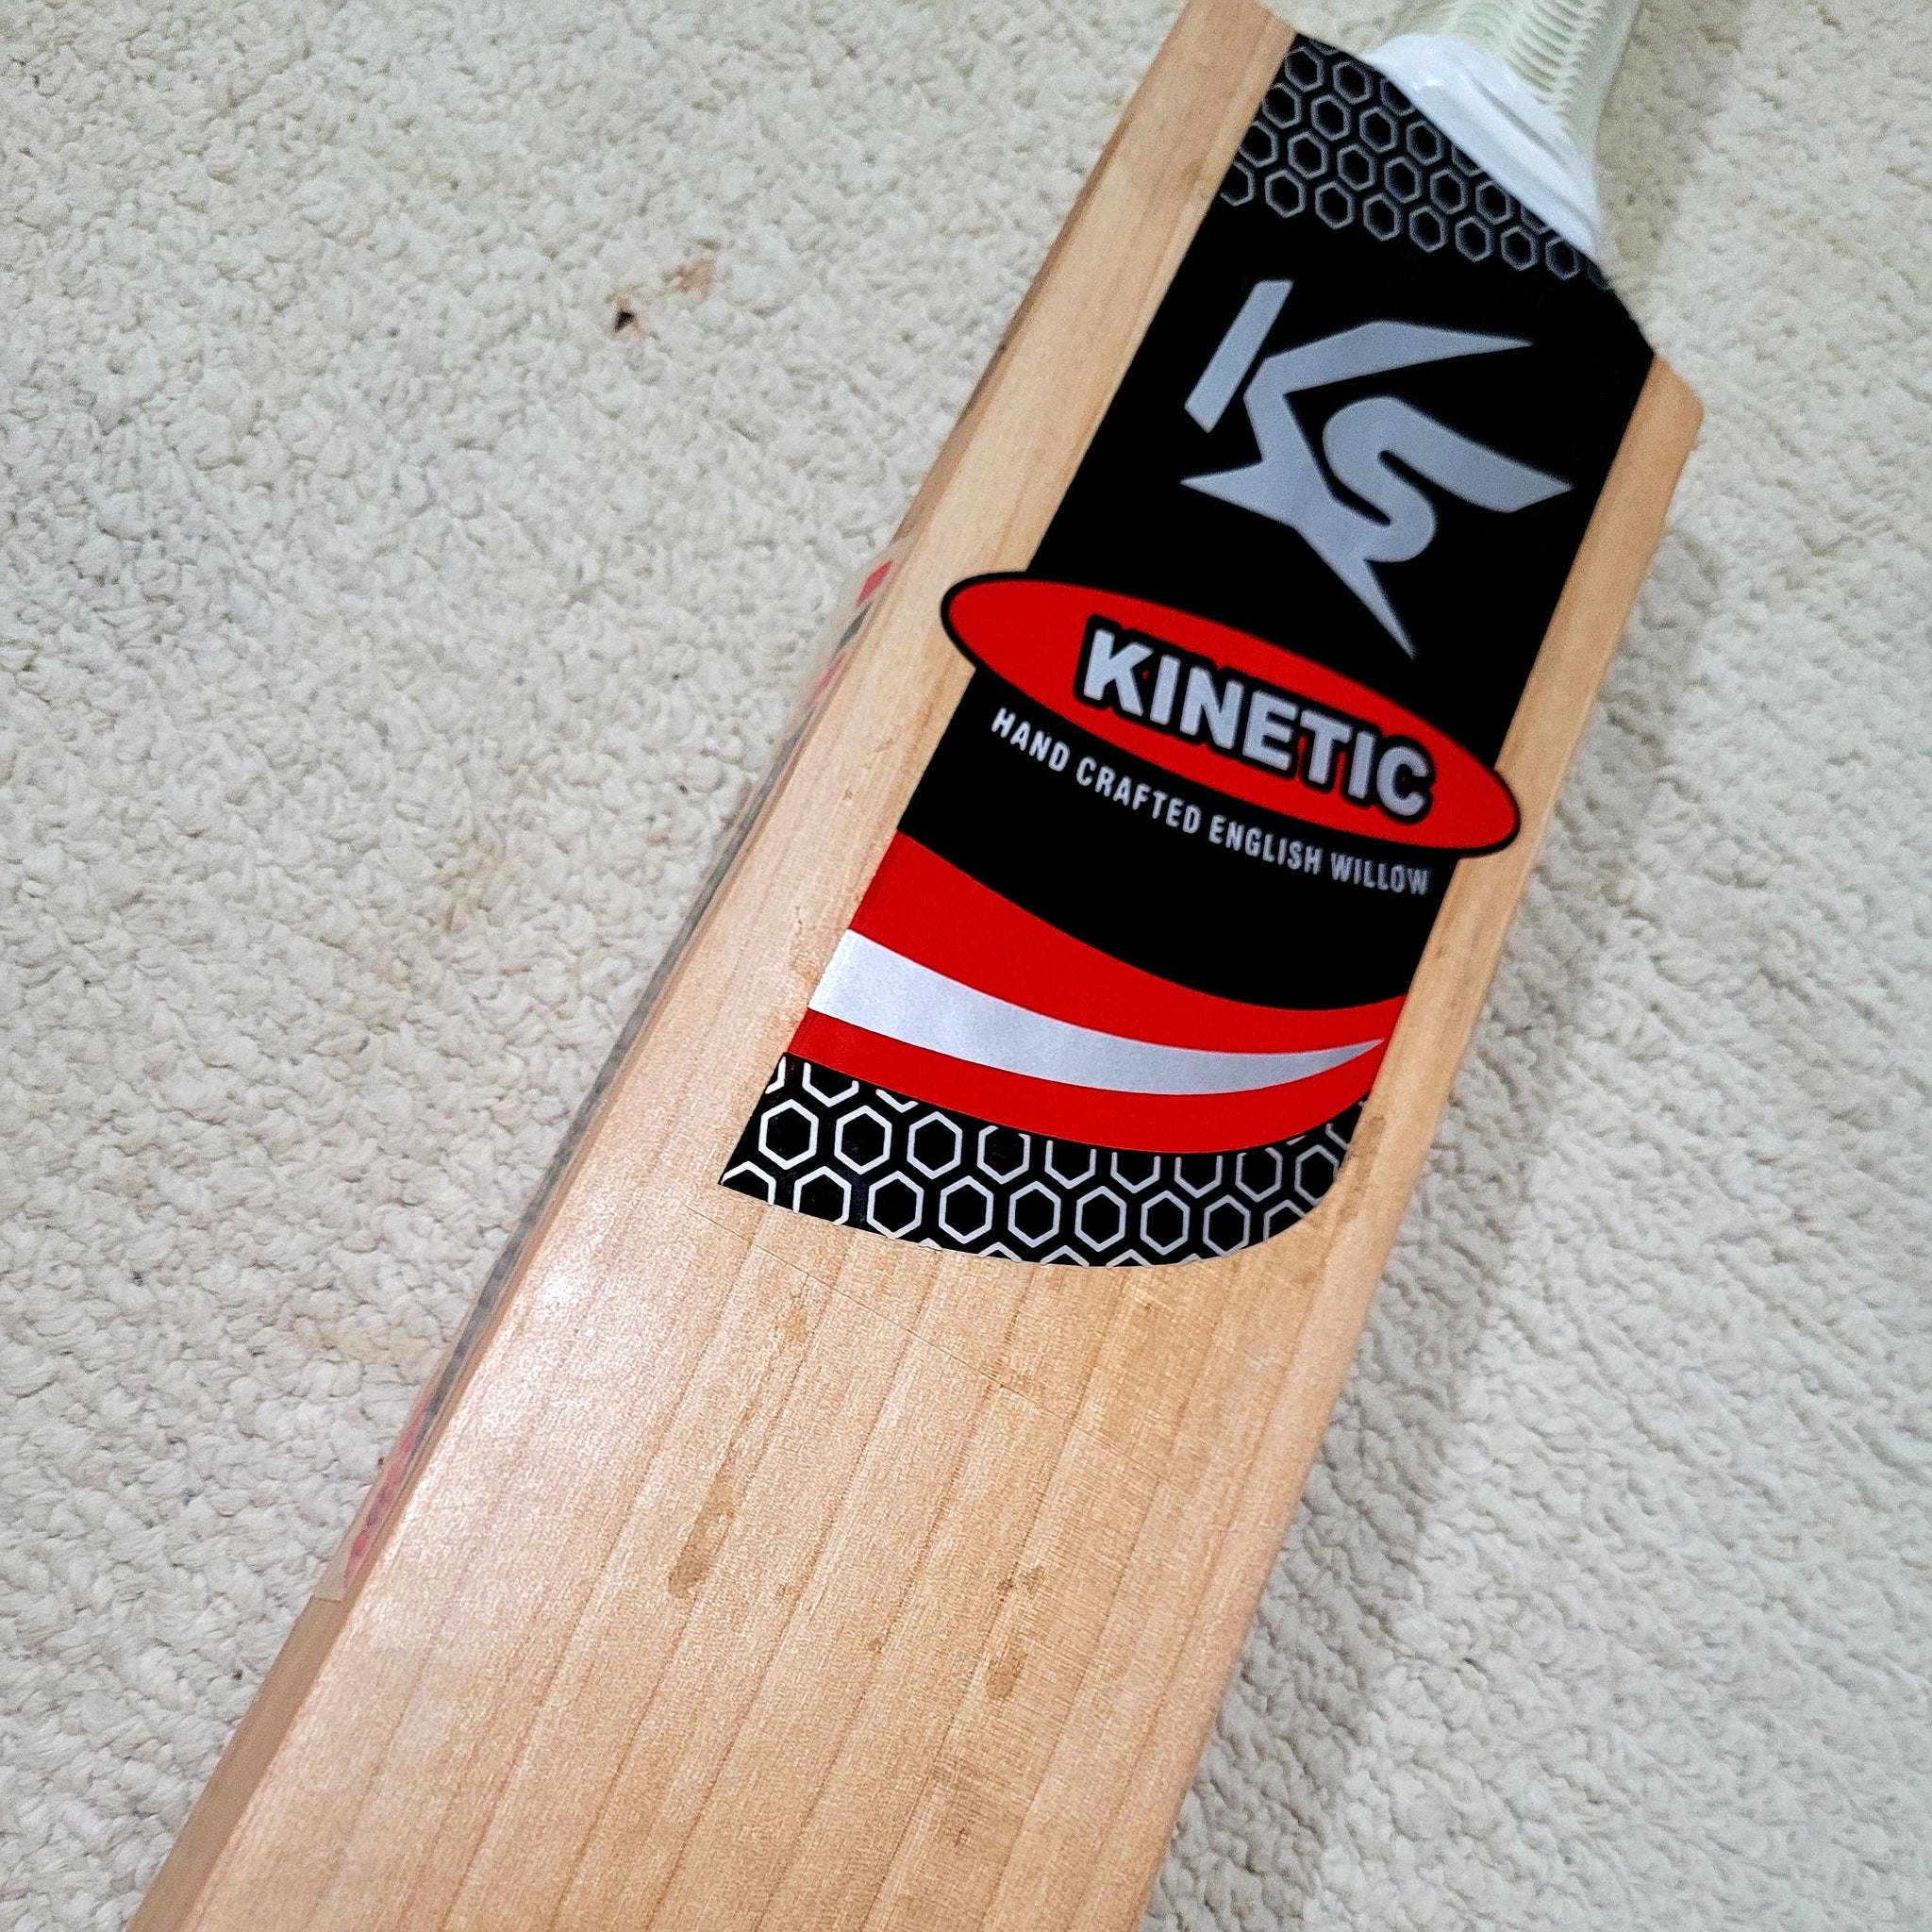 Kinetic Sports - Cricket Shop (@kineticsportsyyc) • Instagram